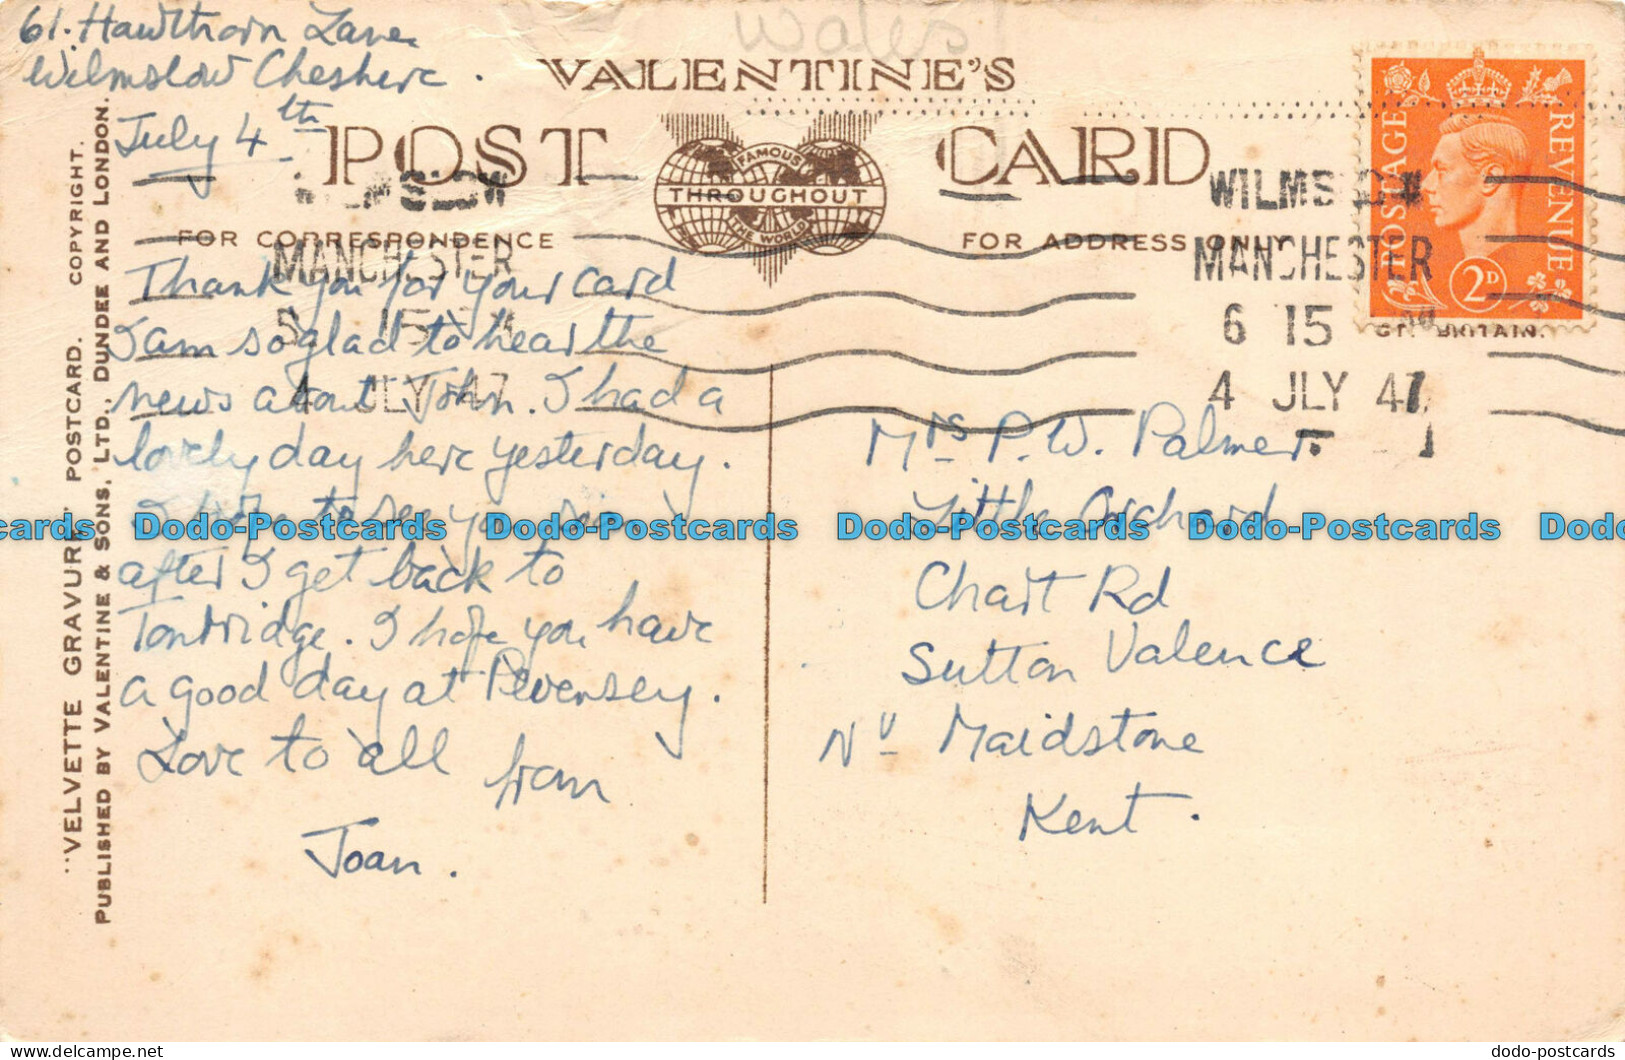 R075259 Llandudno Bay And Great Orme. Velvette Gravure. Valentine. 1947 - World